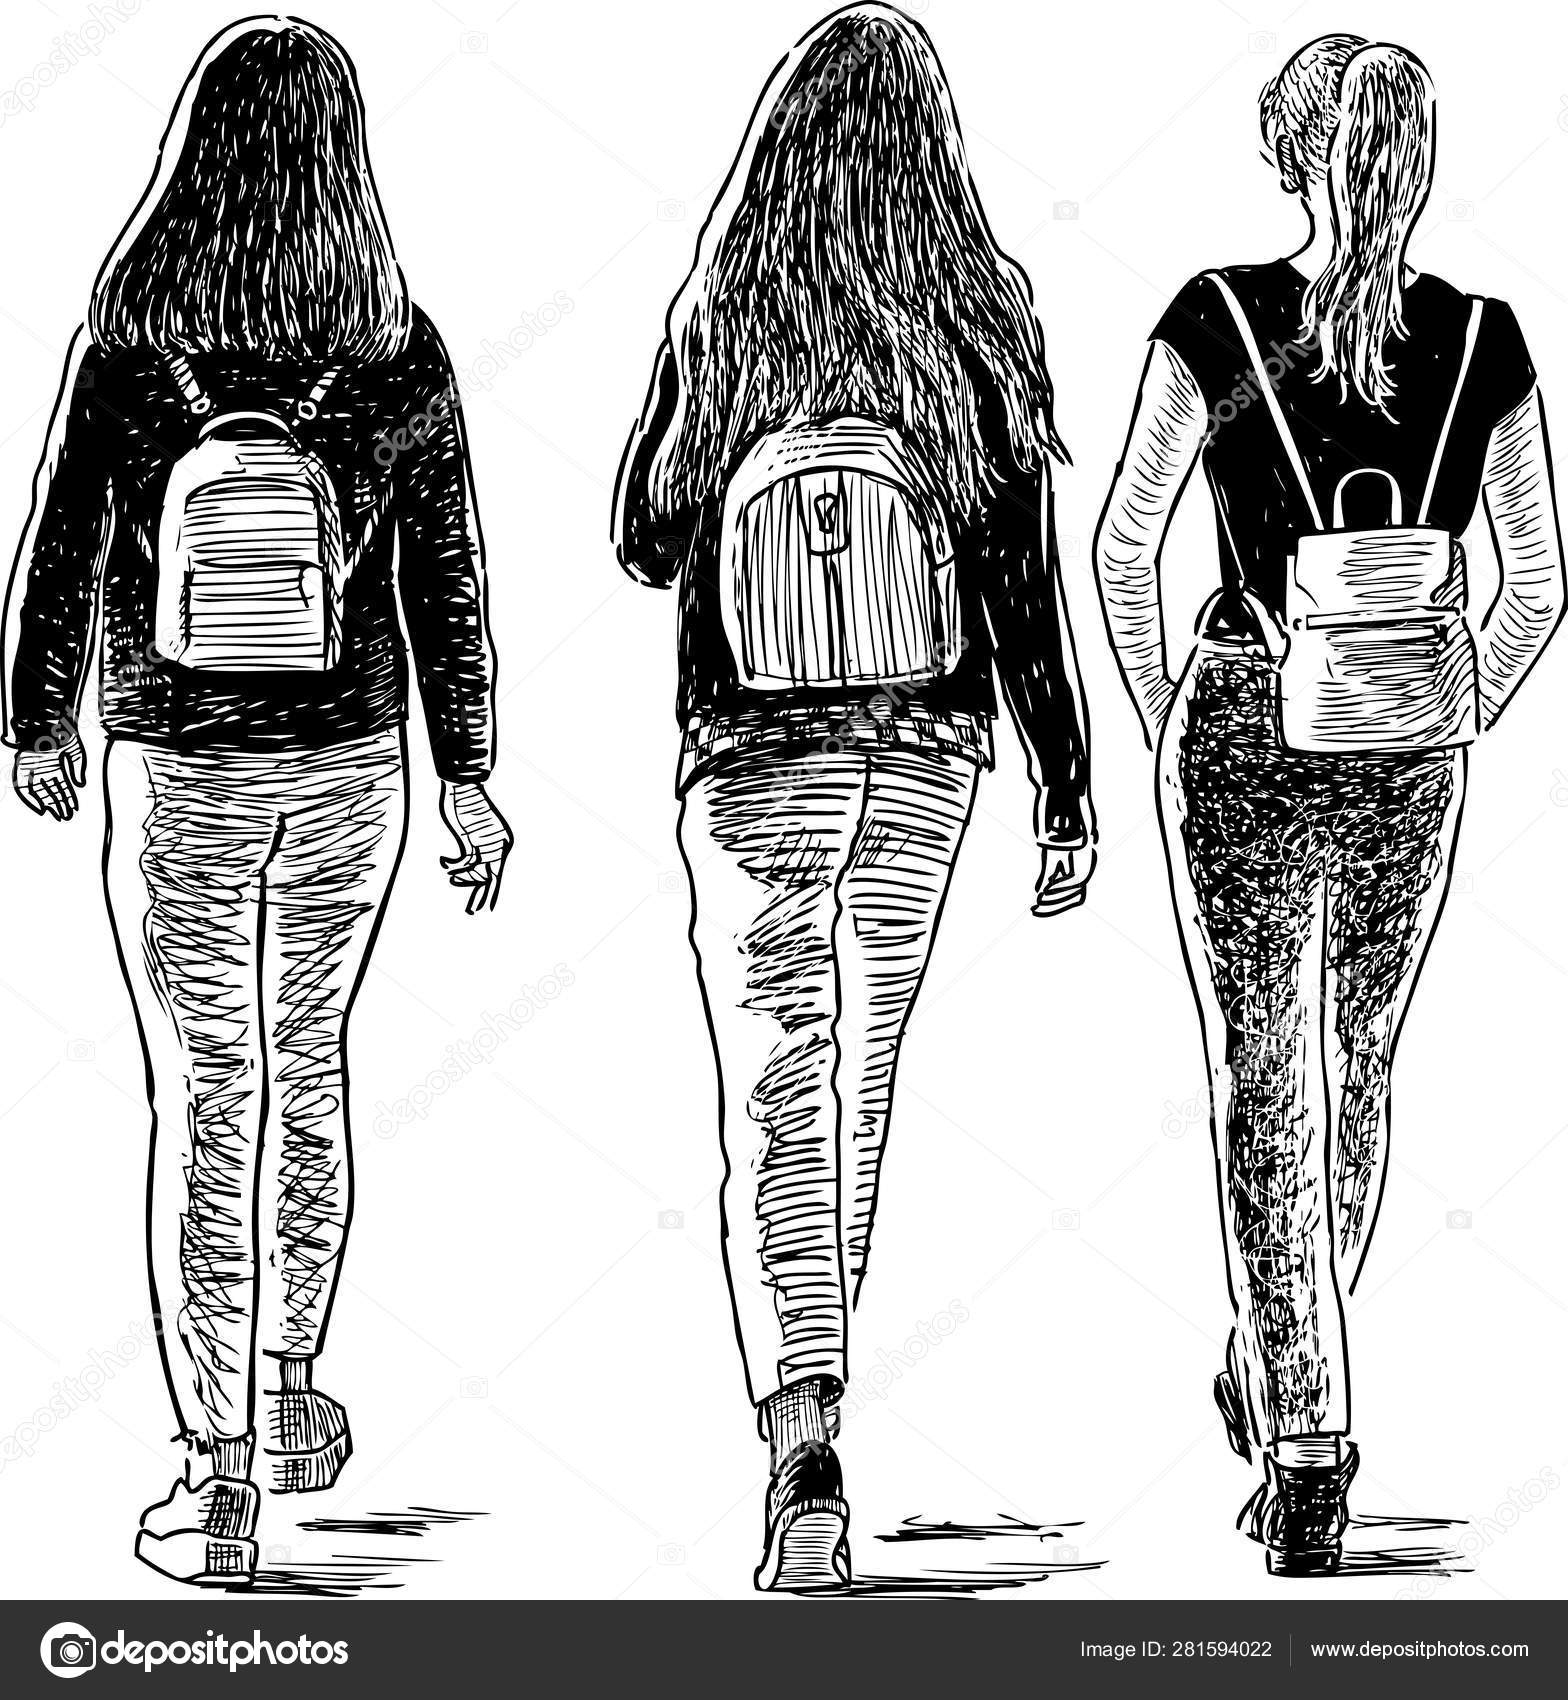 https://st4.depositphotos.com/3258967/28159/v/1600/depositphotos_281594022-stock-illustration-sketch-teens-girls-walking-street.jpg